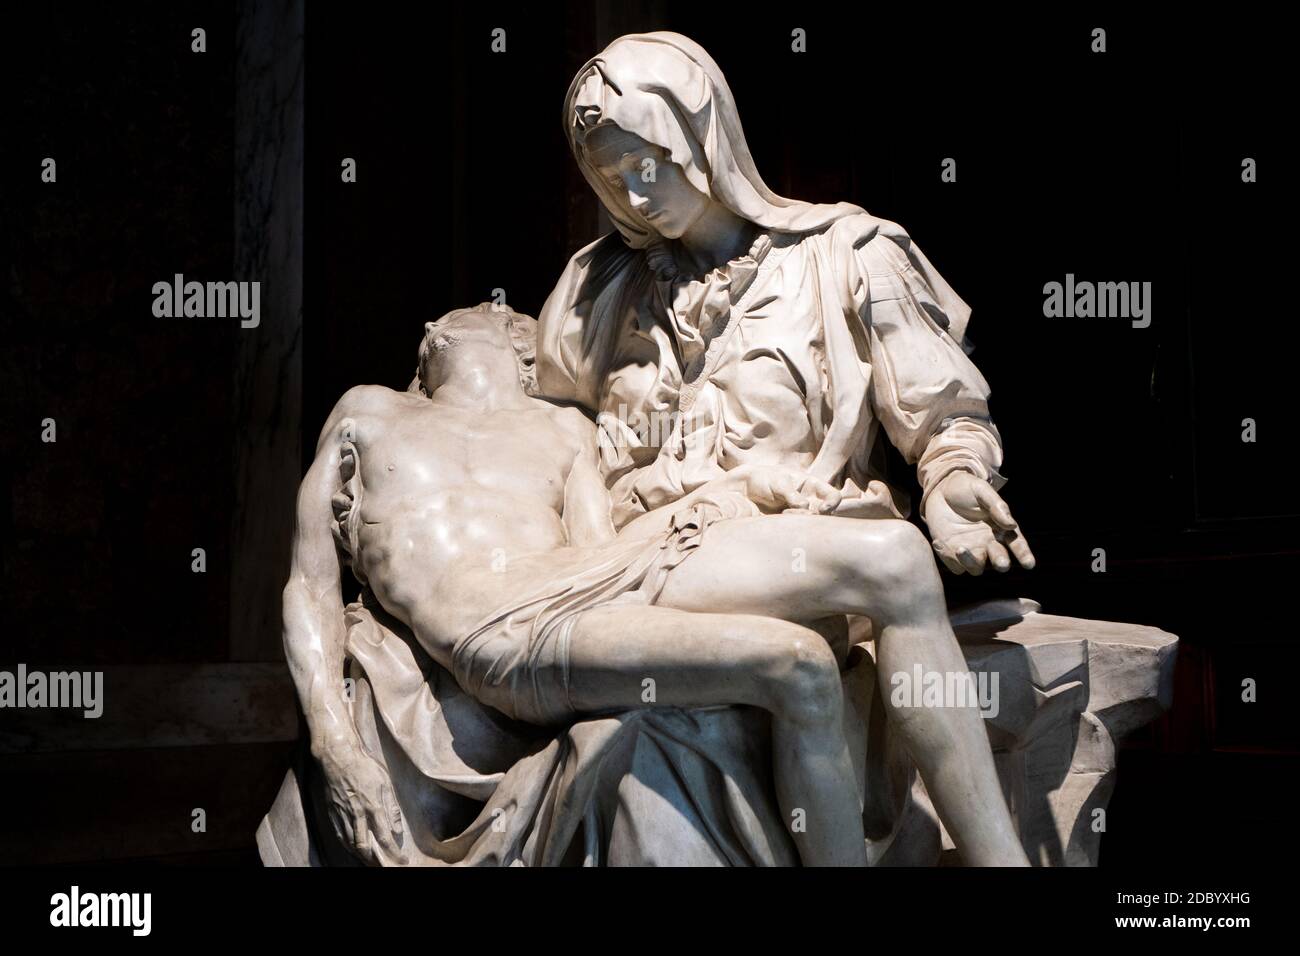 Vatican city, Rome - March 07, 2018: Replica of Michelangelo Pieta exhibited in Pinacoteca gallery in Vatican museums Stock Photo